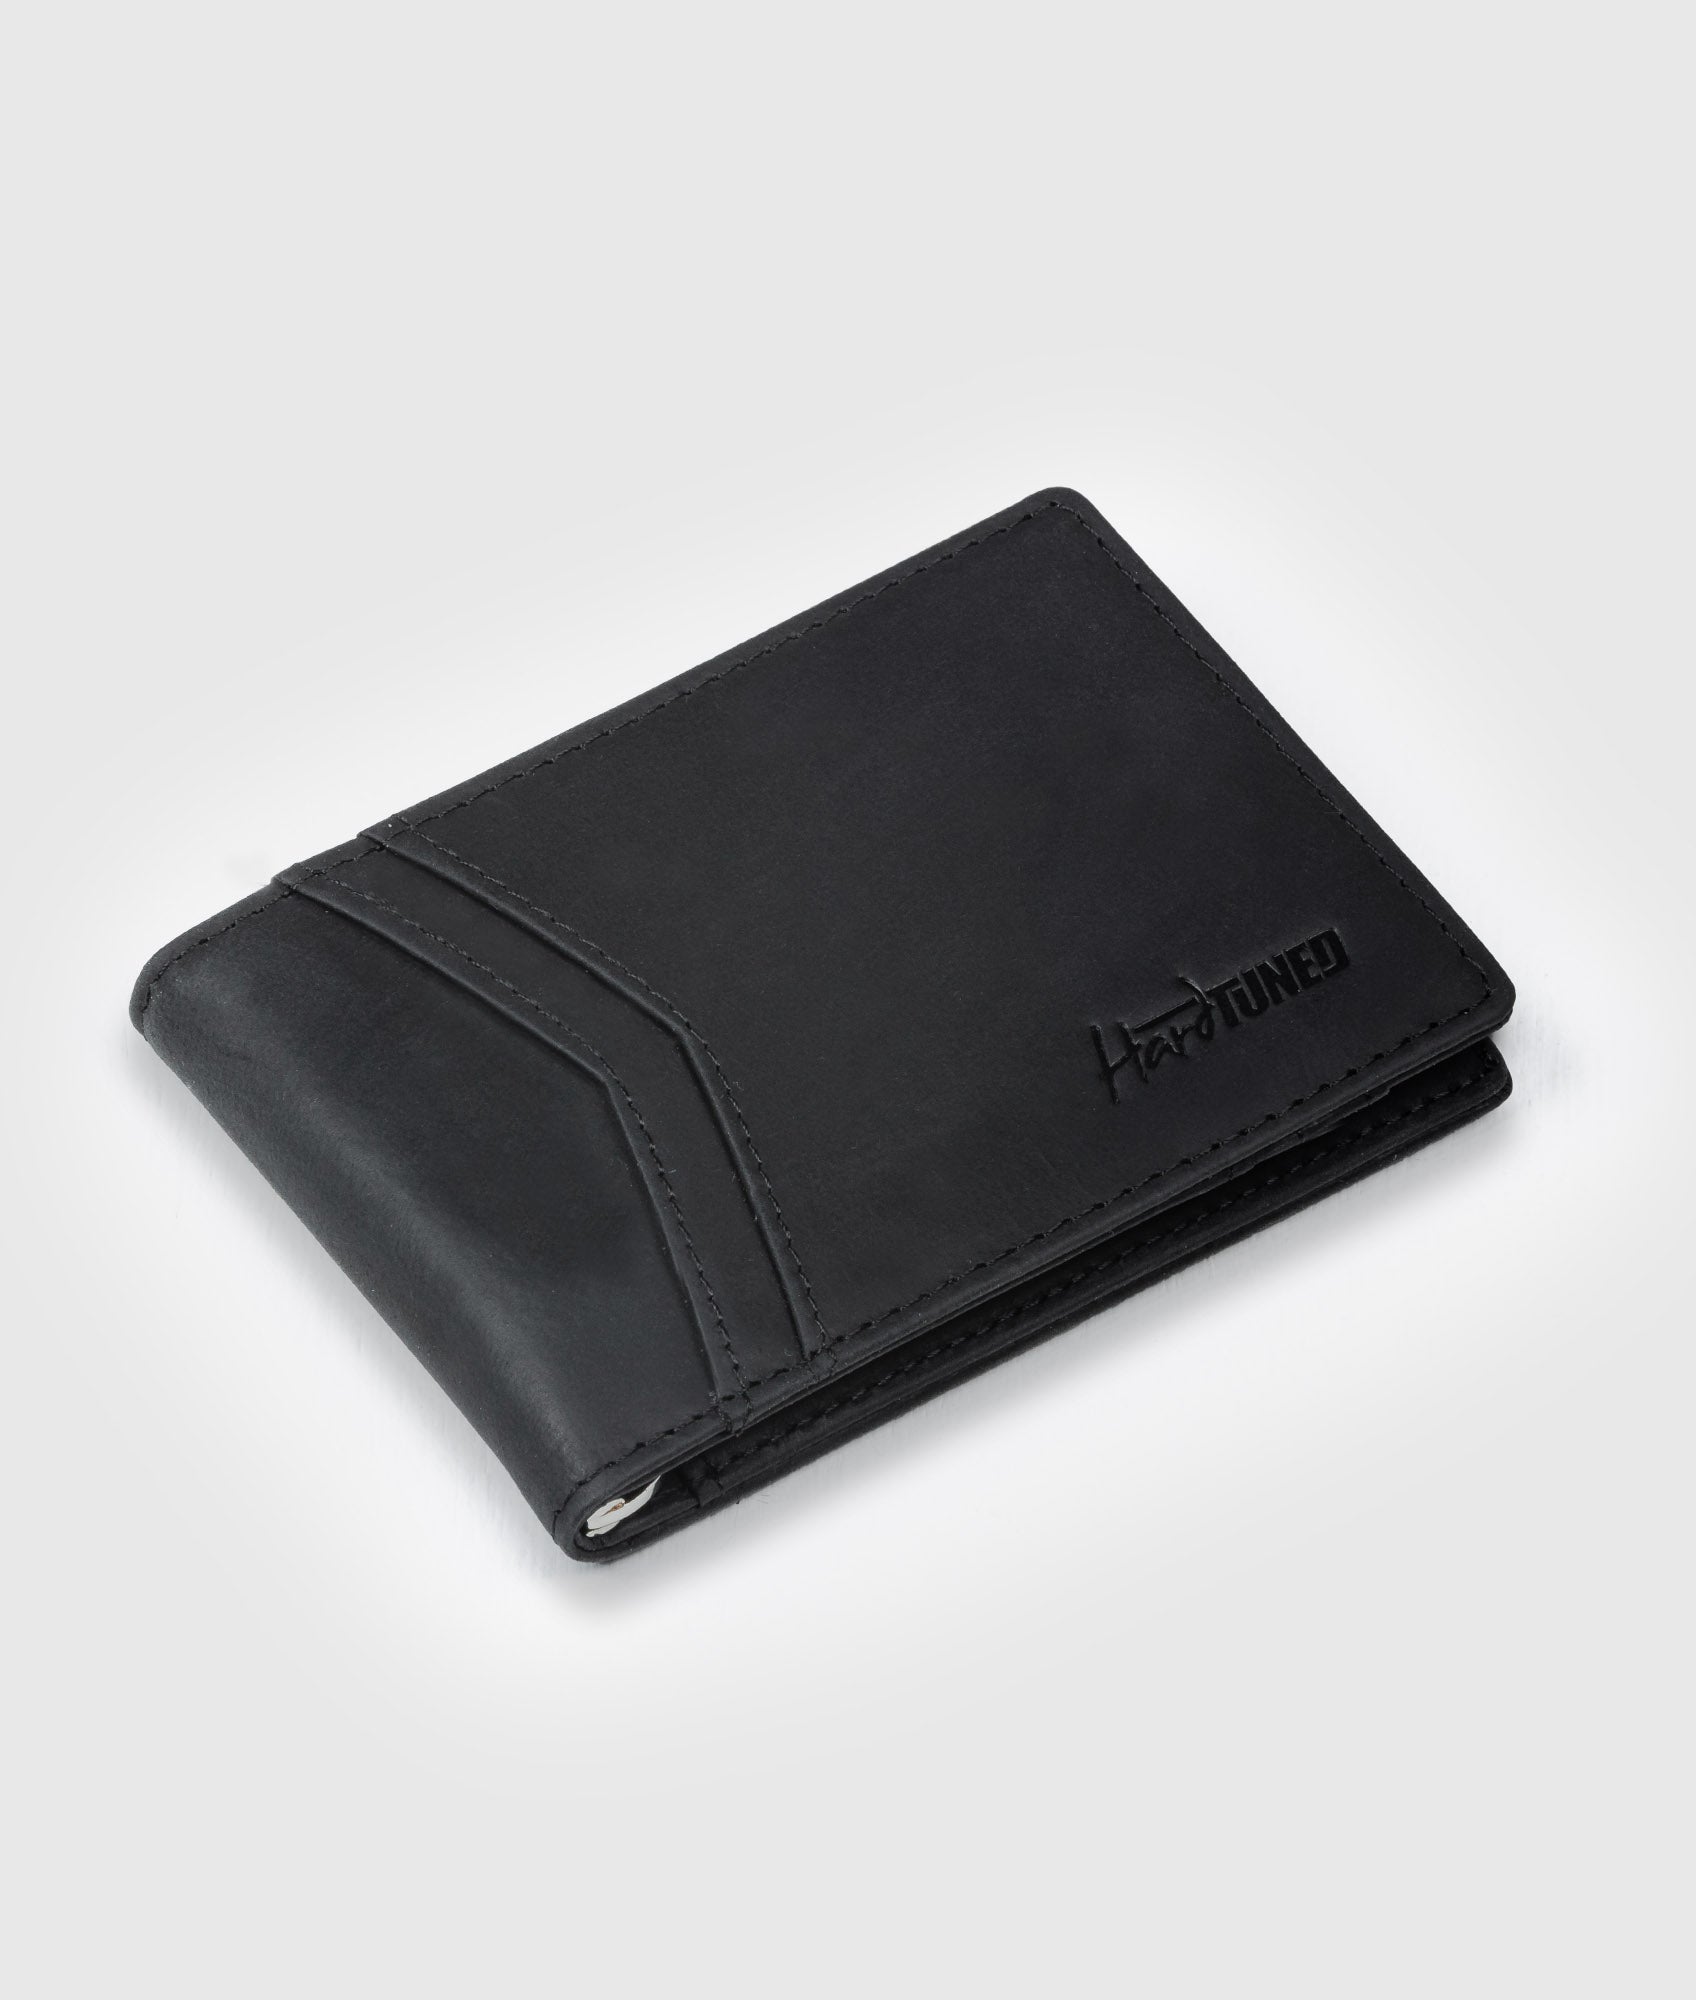 Daikoku Classic Black Wallet - Hardtuned